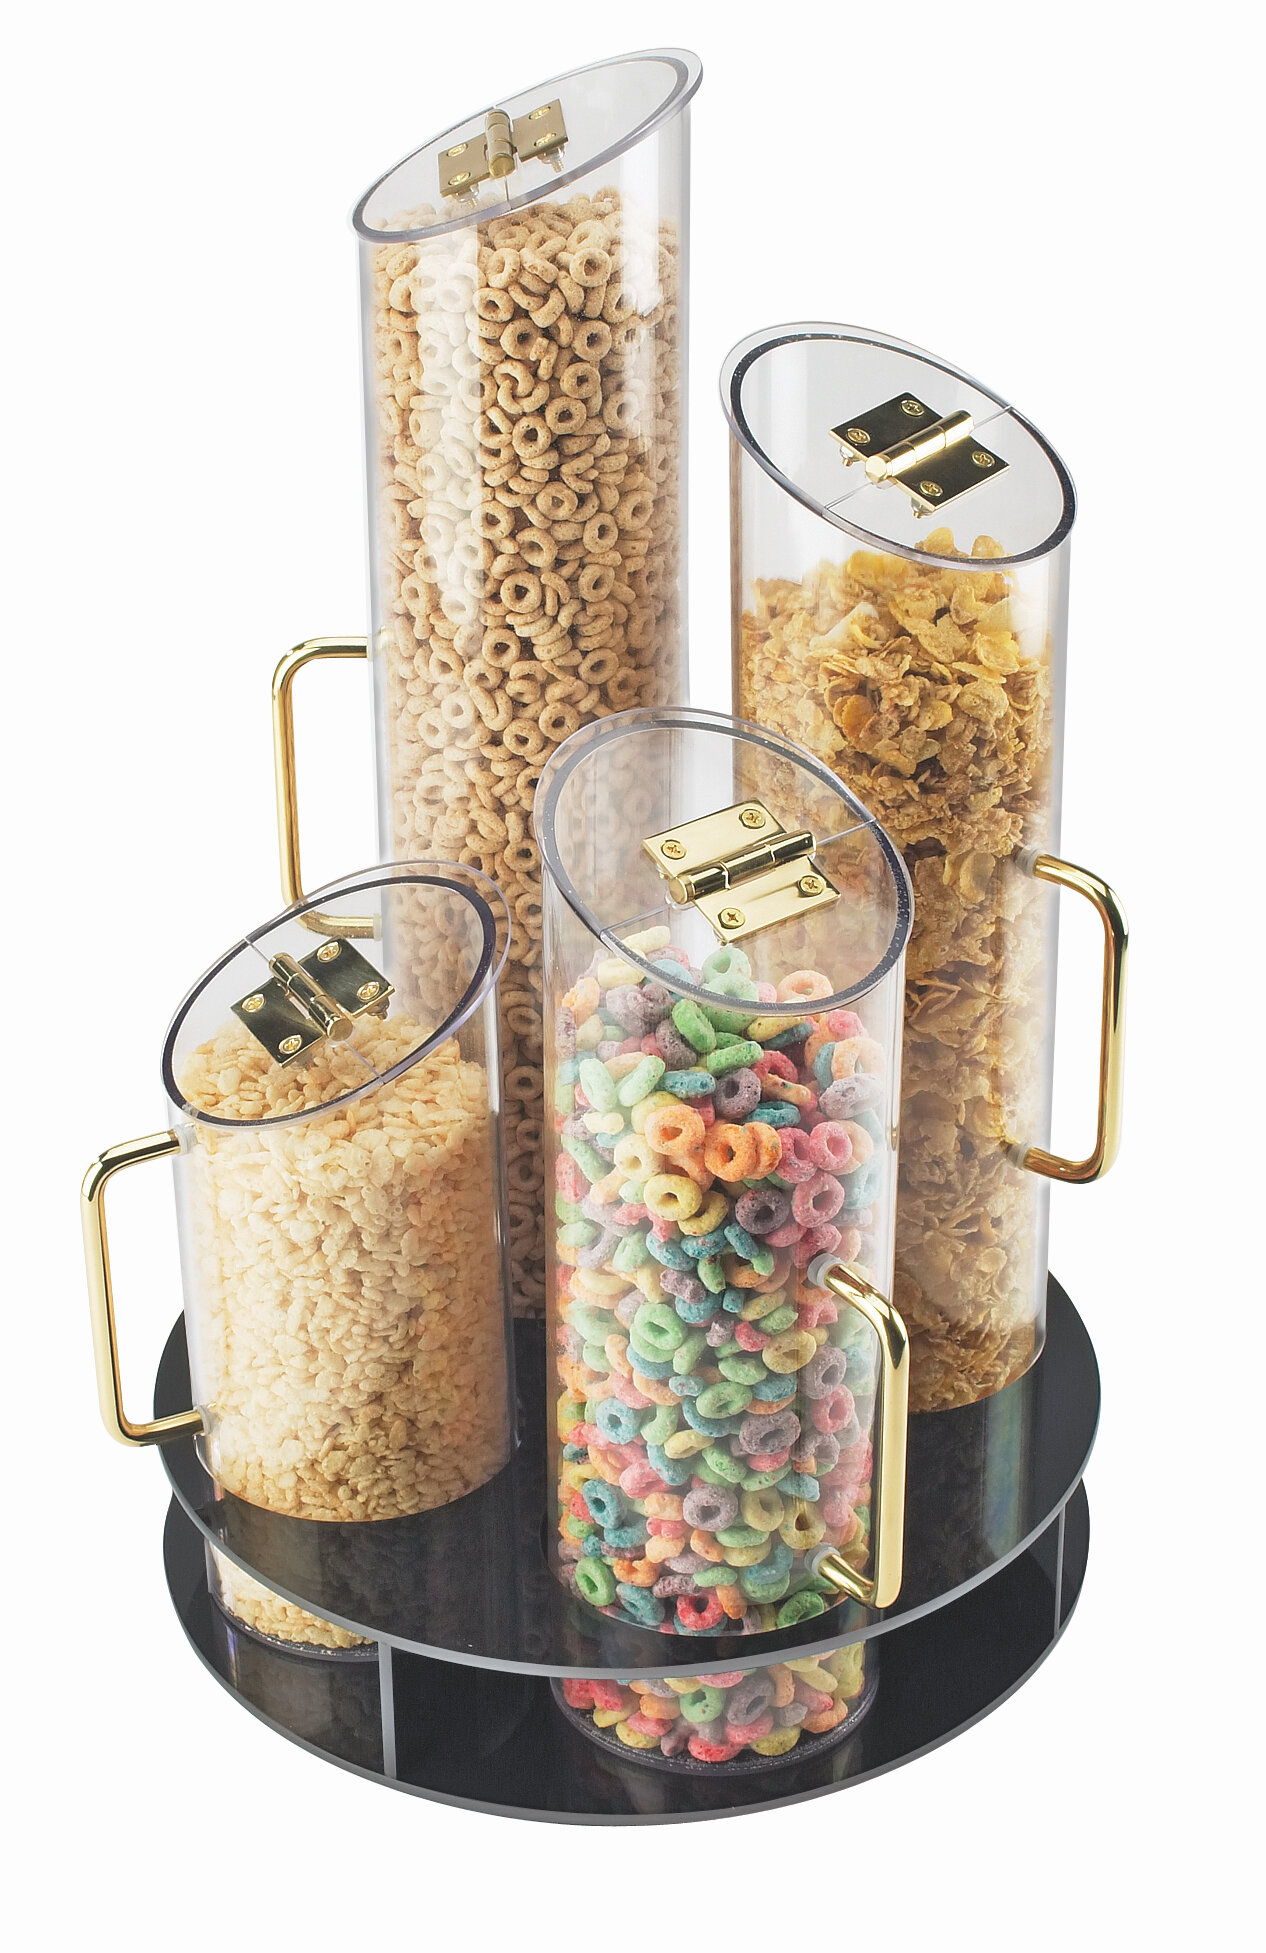 Round Cereal Dispenser